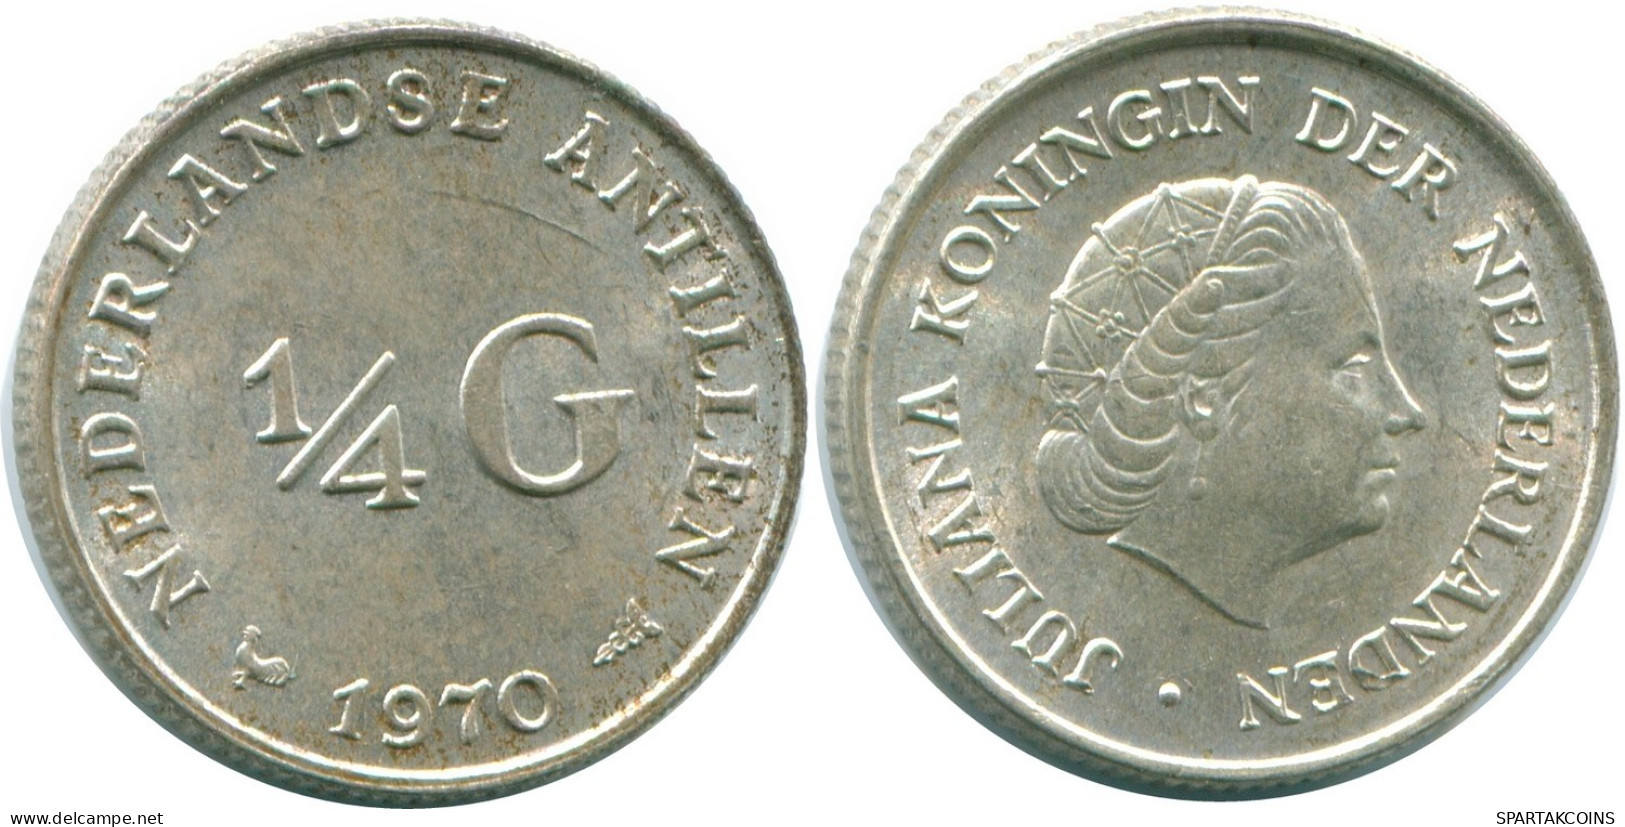 1/4 GULDEN 1970 NETHERLANDS ANTILLES SILVER Colonial Coin #NL11627.4.U.A - Netherlands Antilles